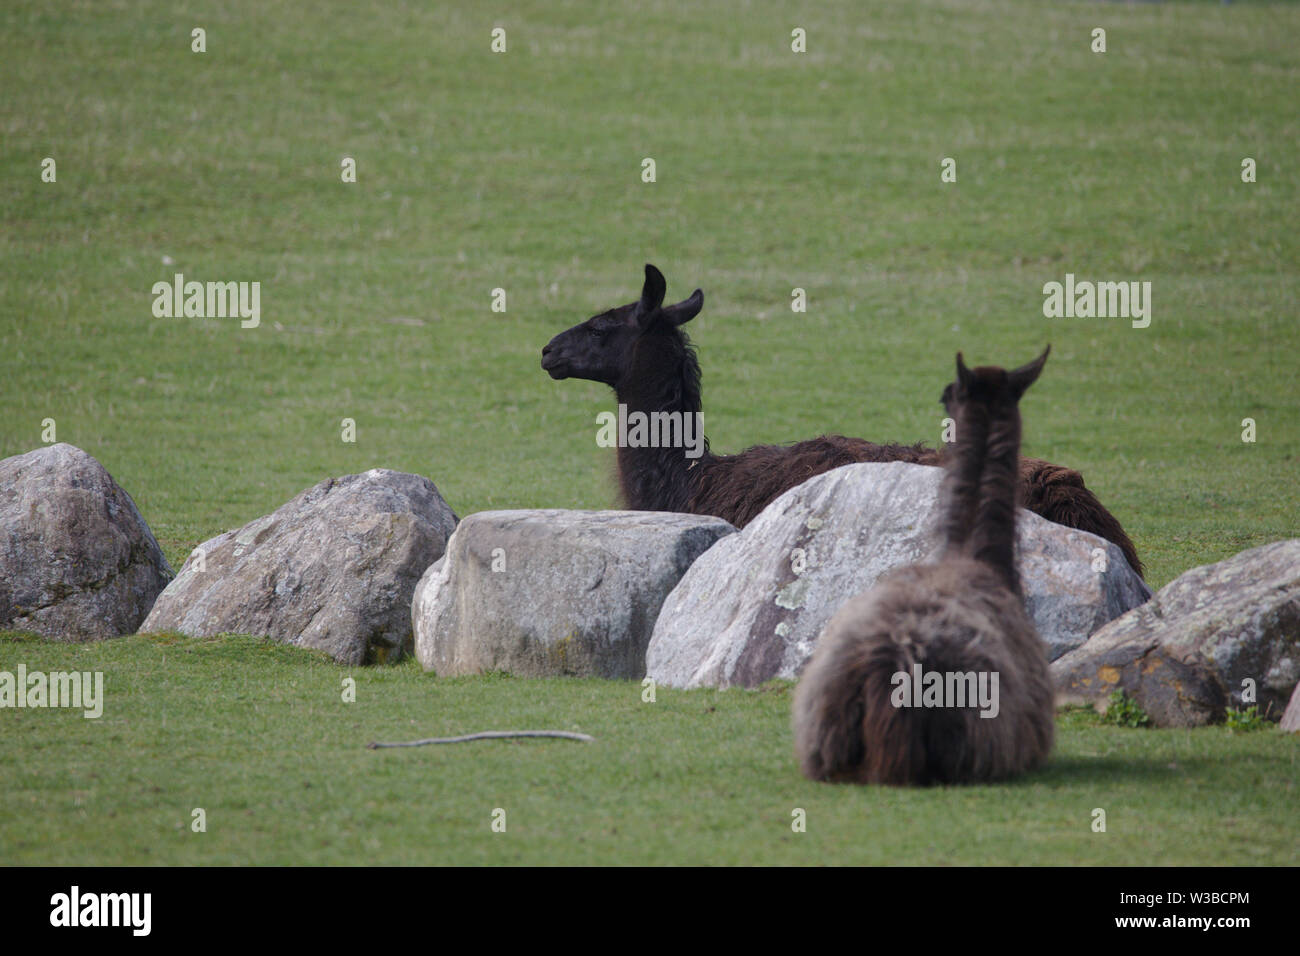 llamas with afros